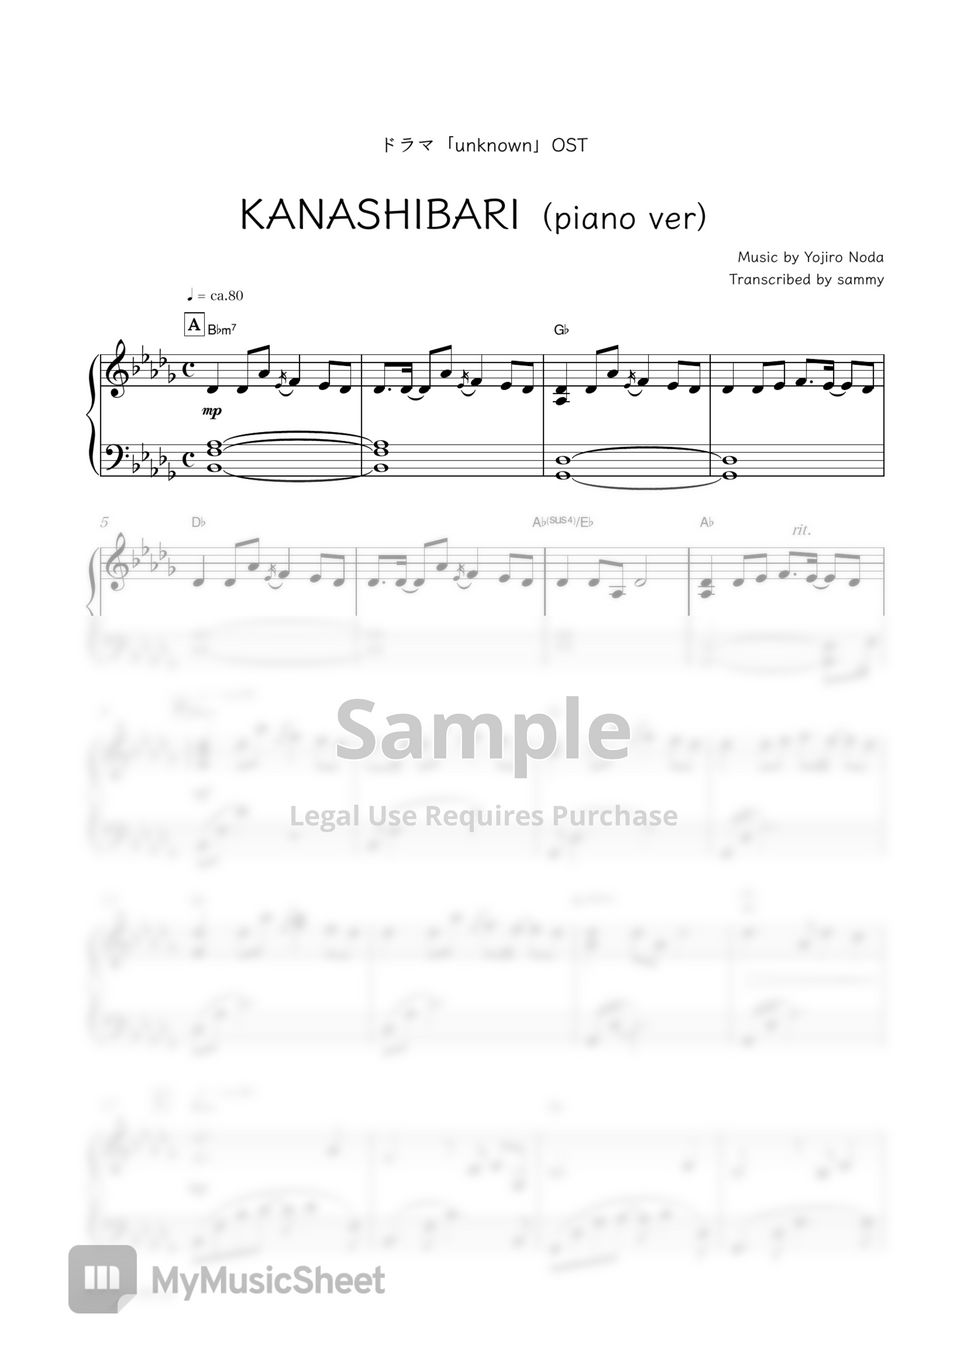 Japanese TV series  "Unknown" OST - Kanashibari (Piano Ver) by sammy